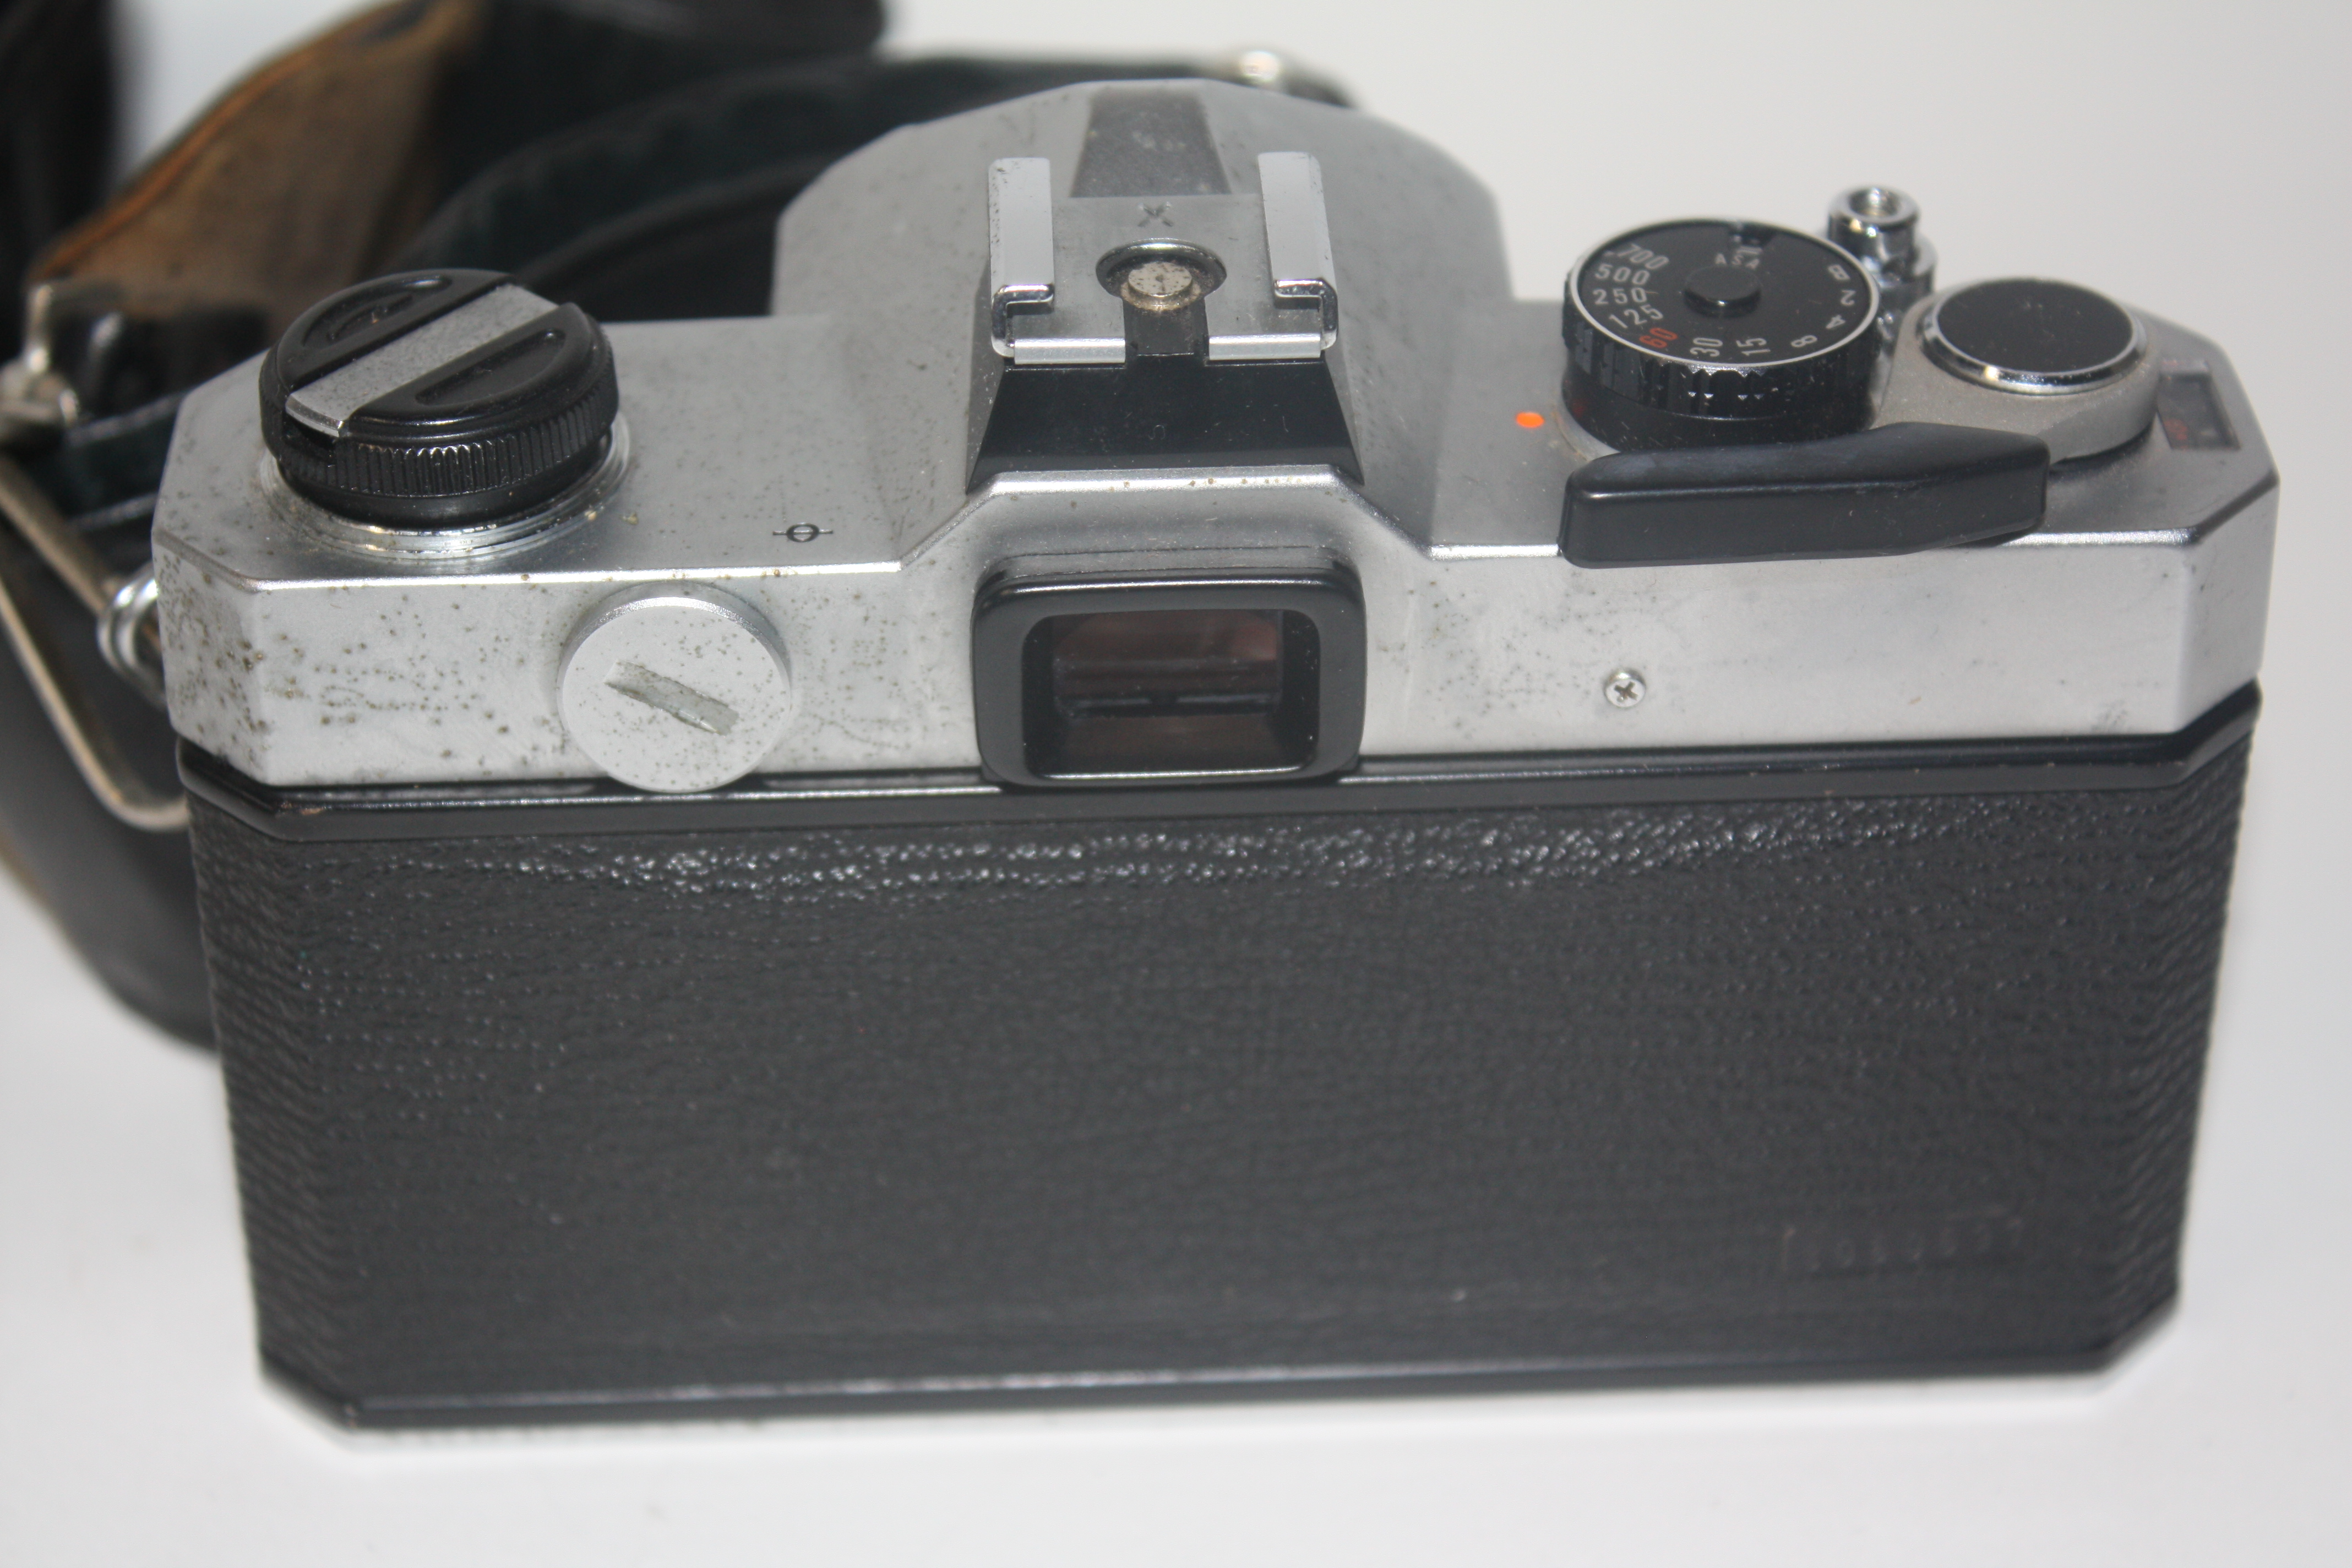 Fujica ST605 film camera with accessories - Image 3 of 3